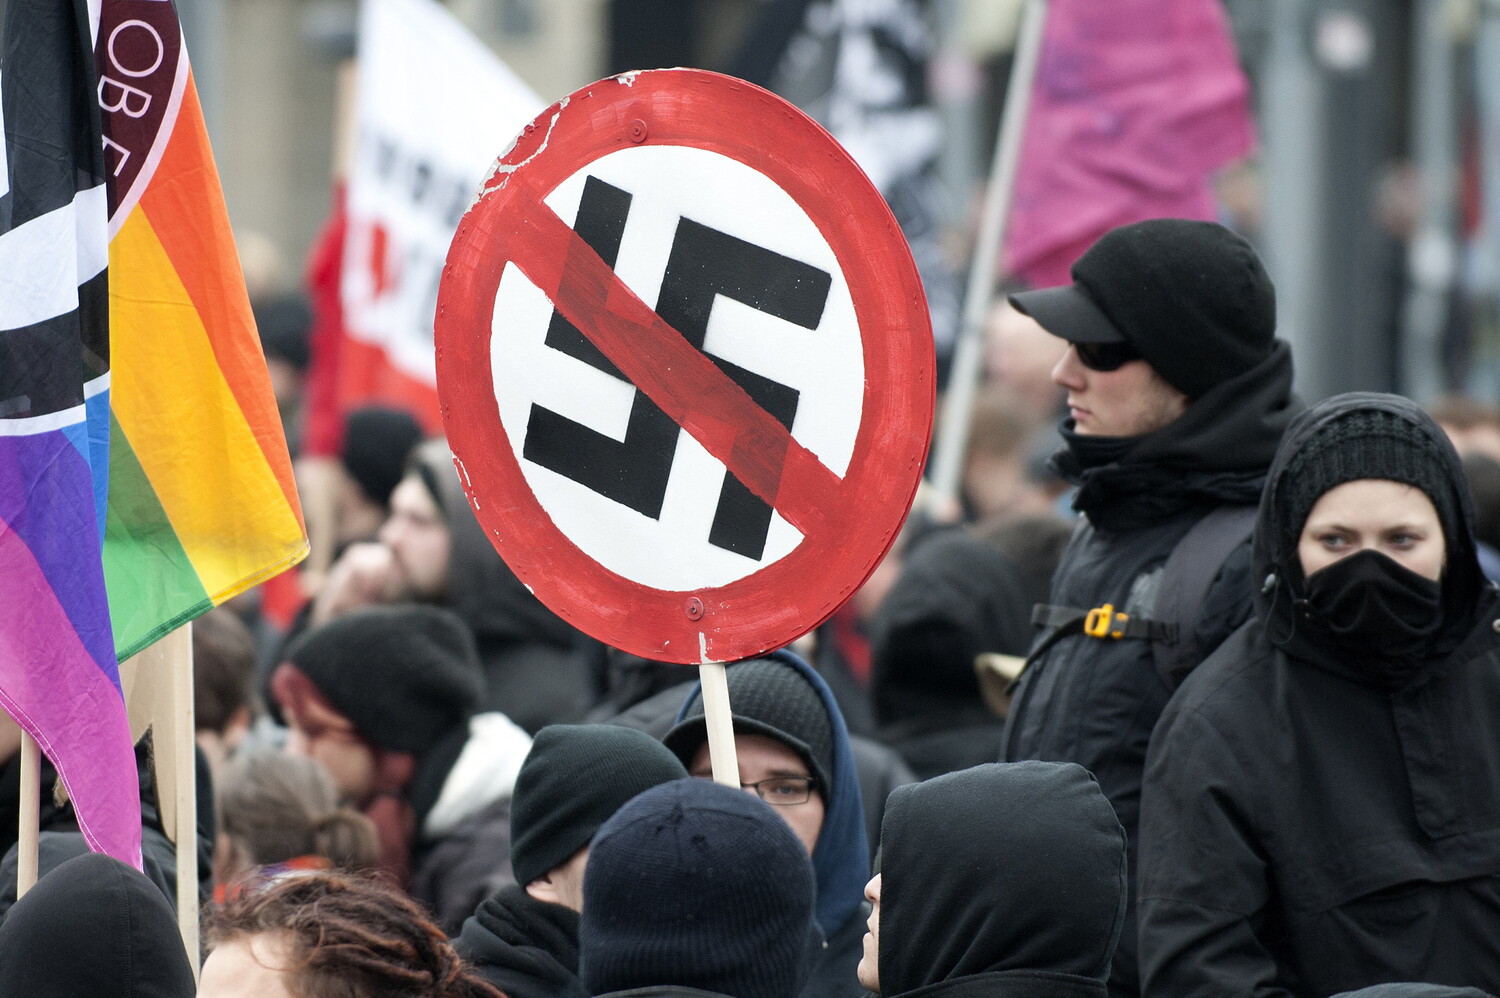 germania, consulta: niente fondi pubblici a neonazisti di heimat